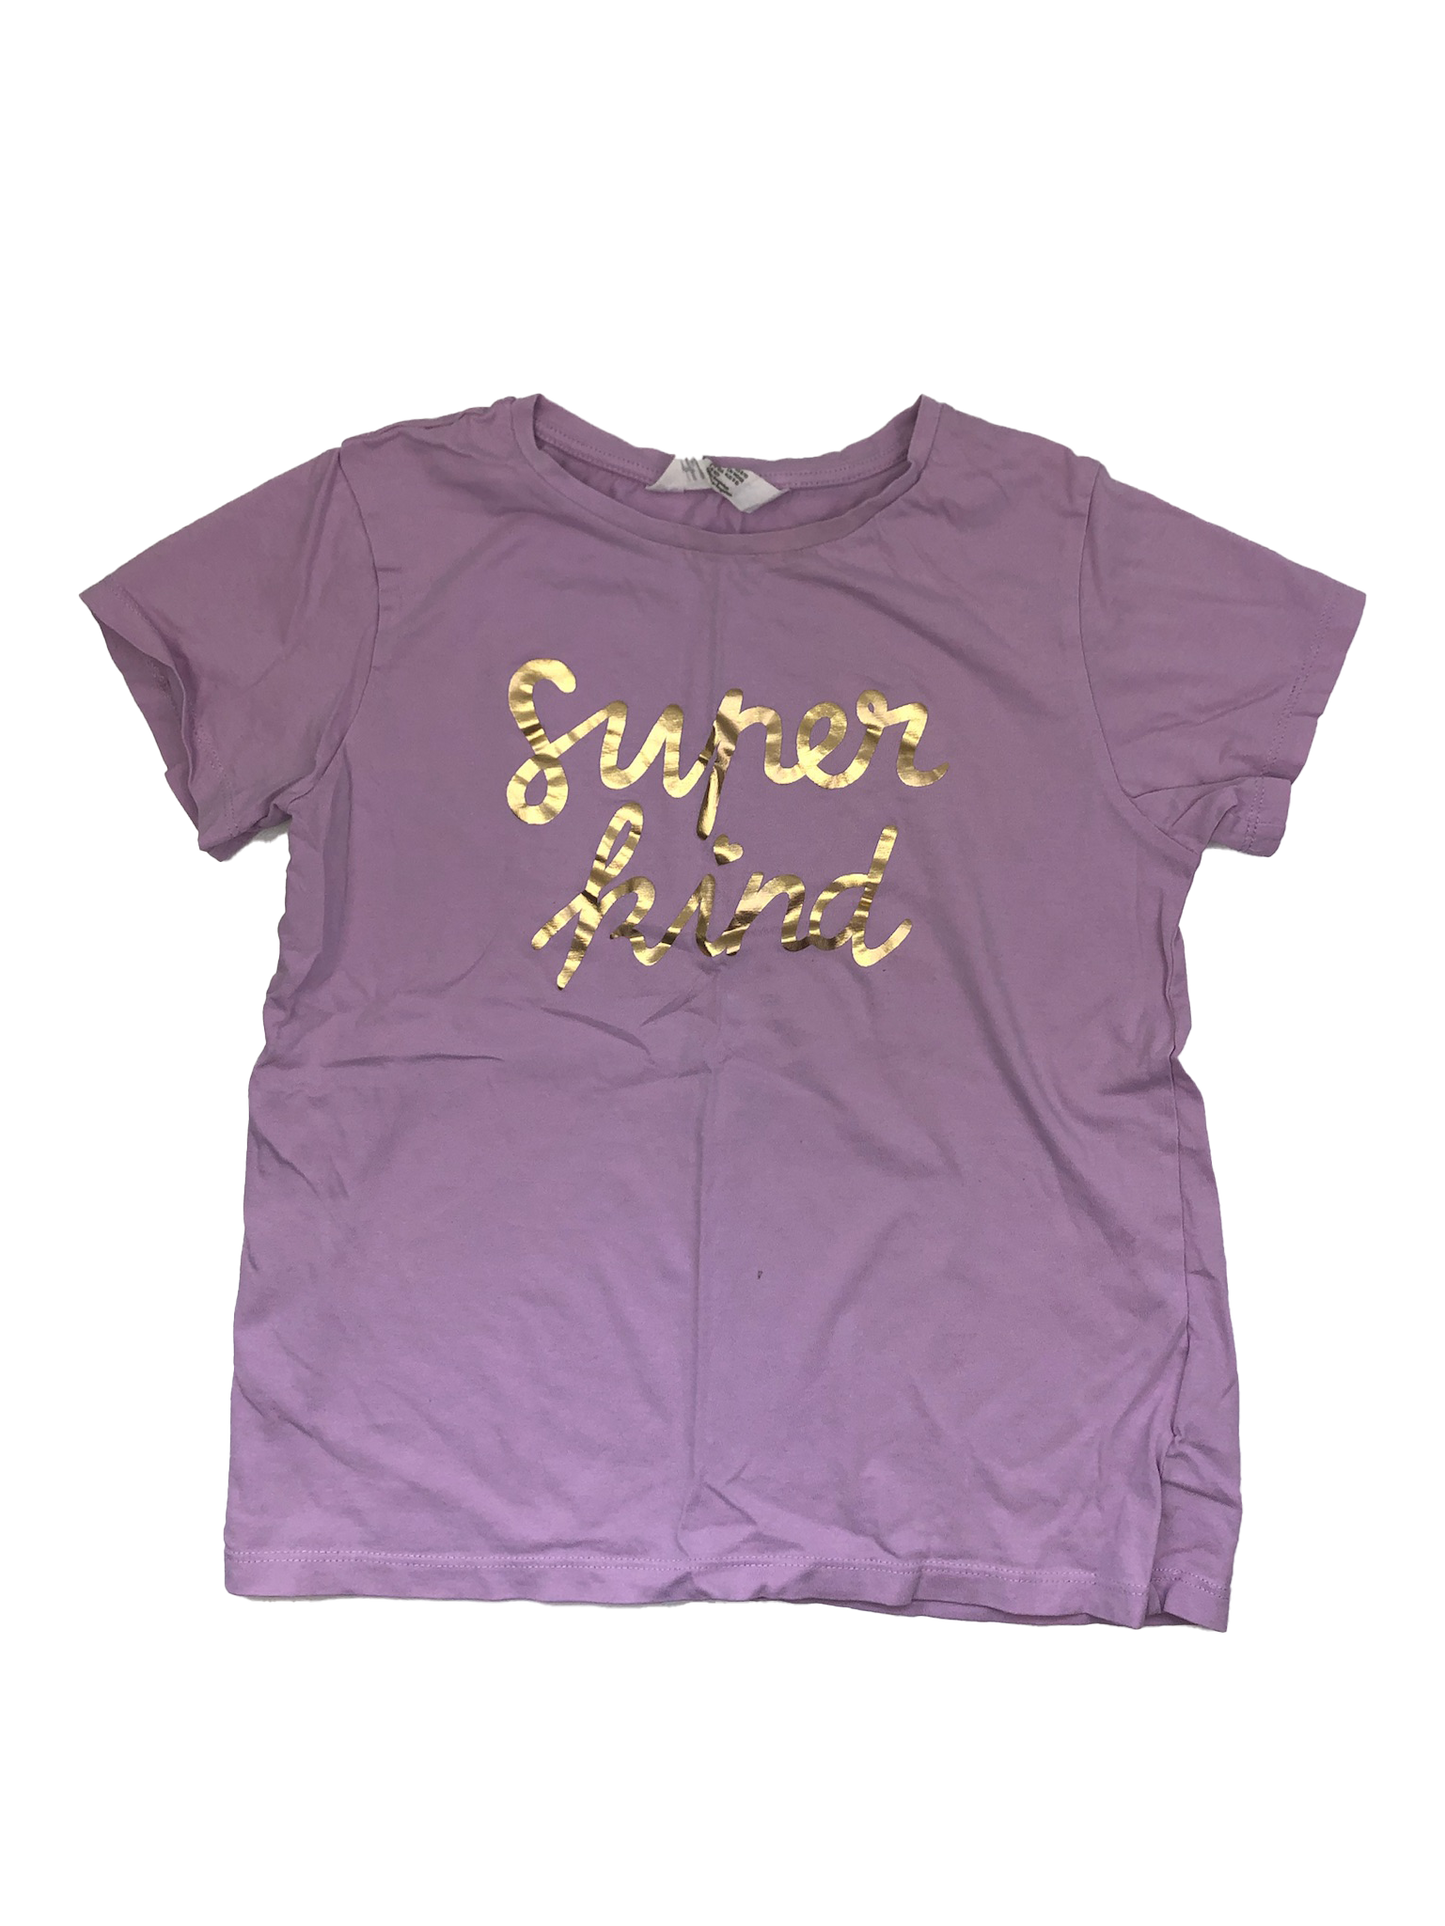 H&M Purple T-Shirt with "Super Kind" 8-10